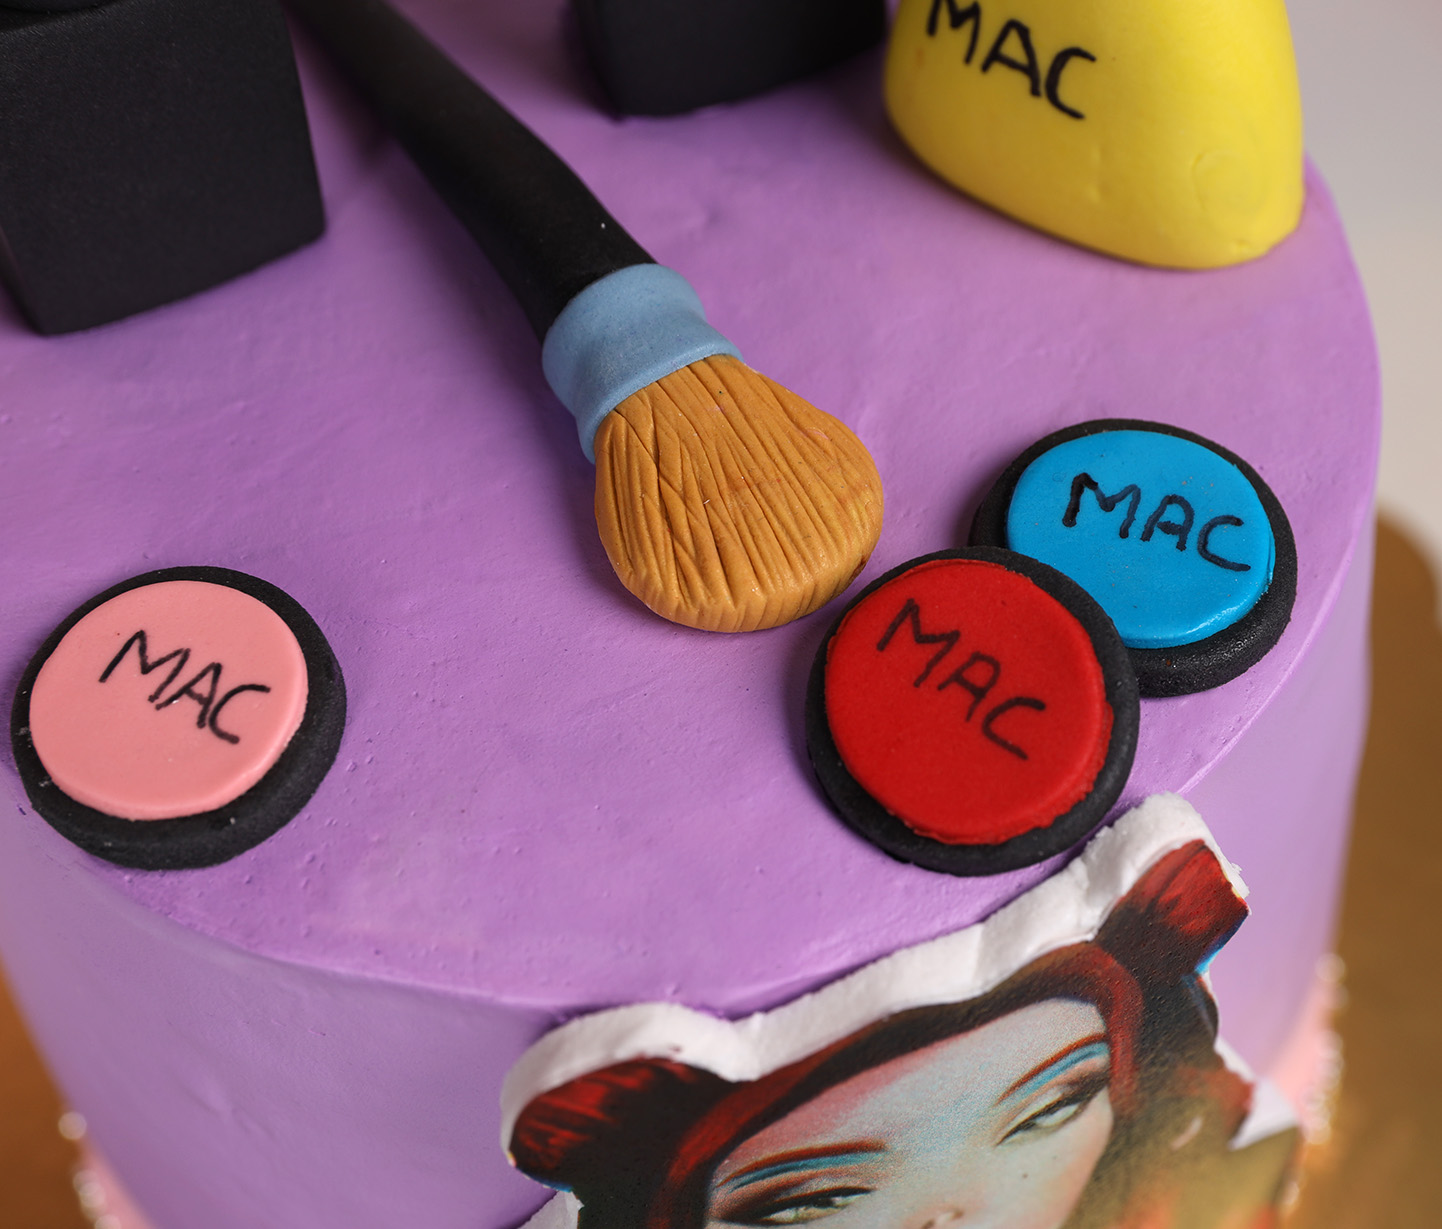 Makeup cake gives dessert an Instagram-ready makeover